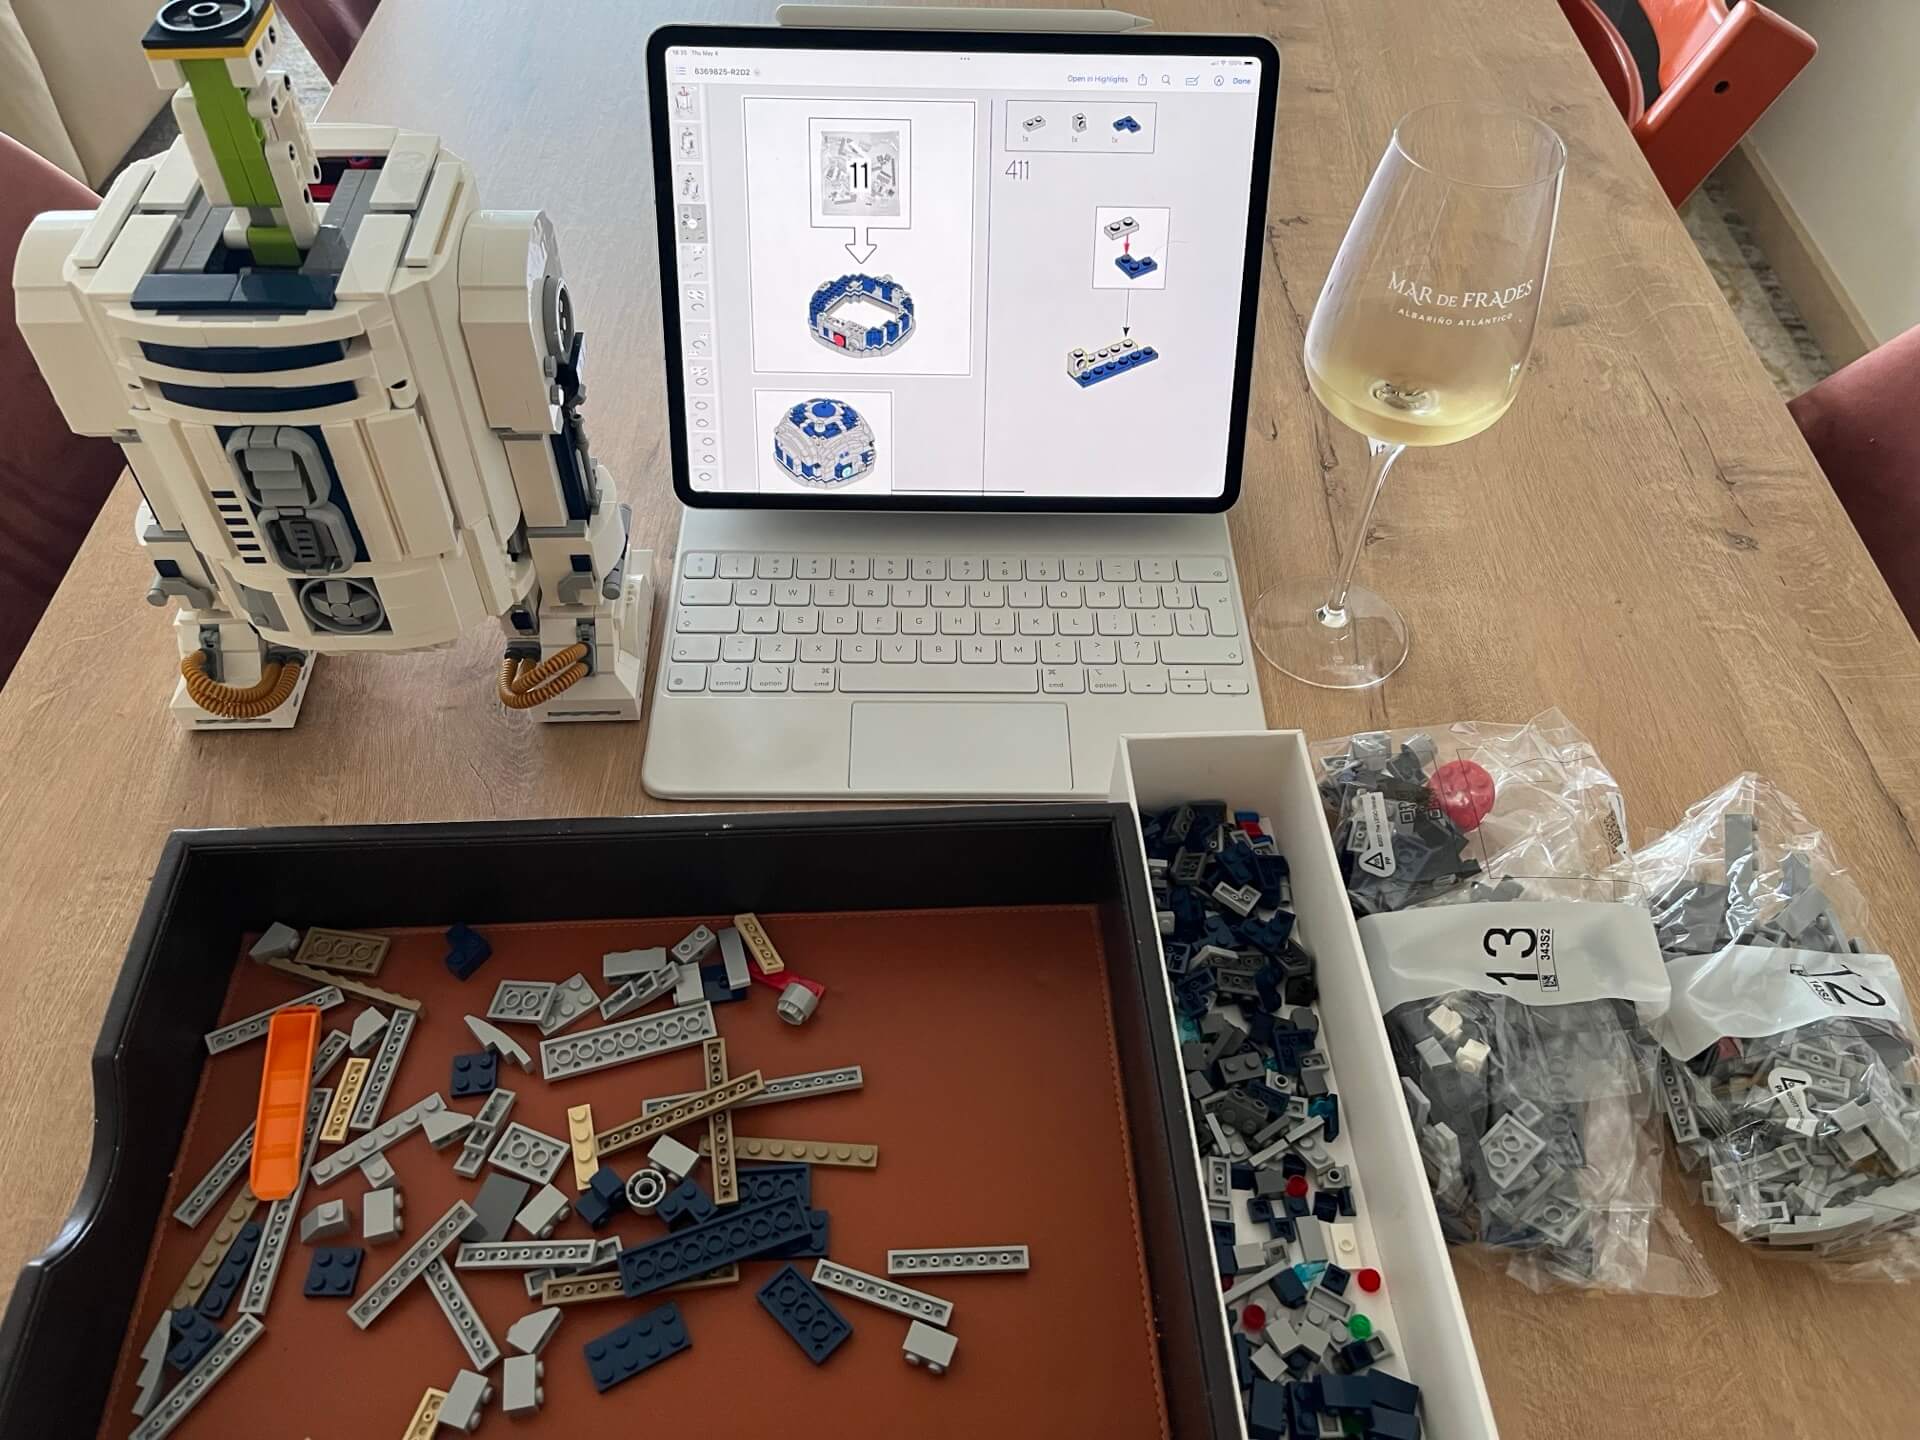 Building R2D2 Star Wars Lego robot which I got last Christmas head